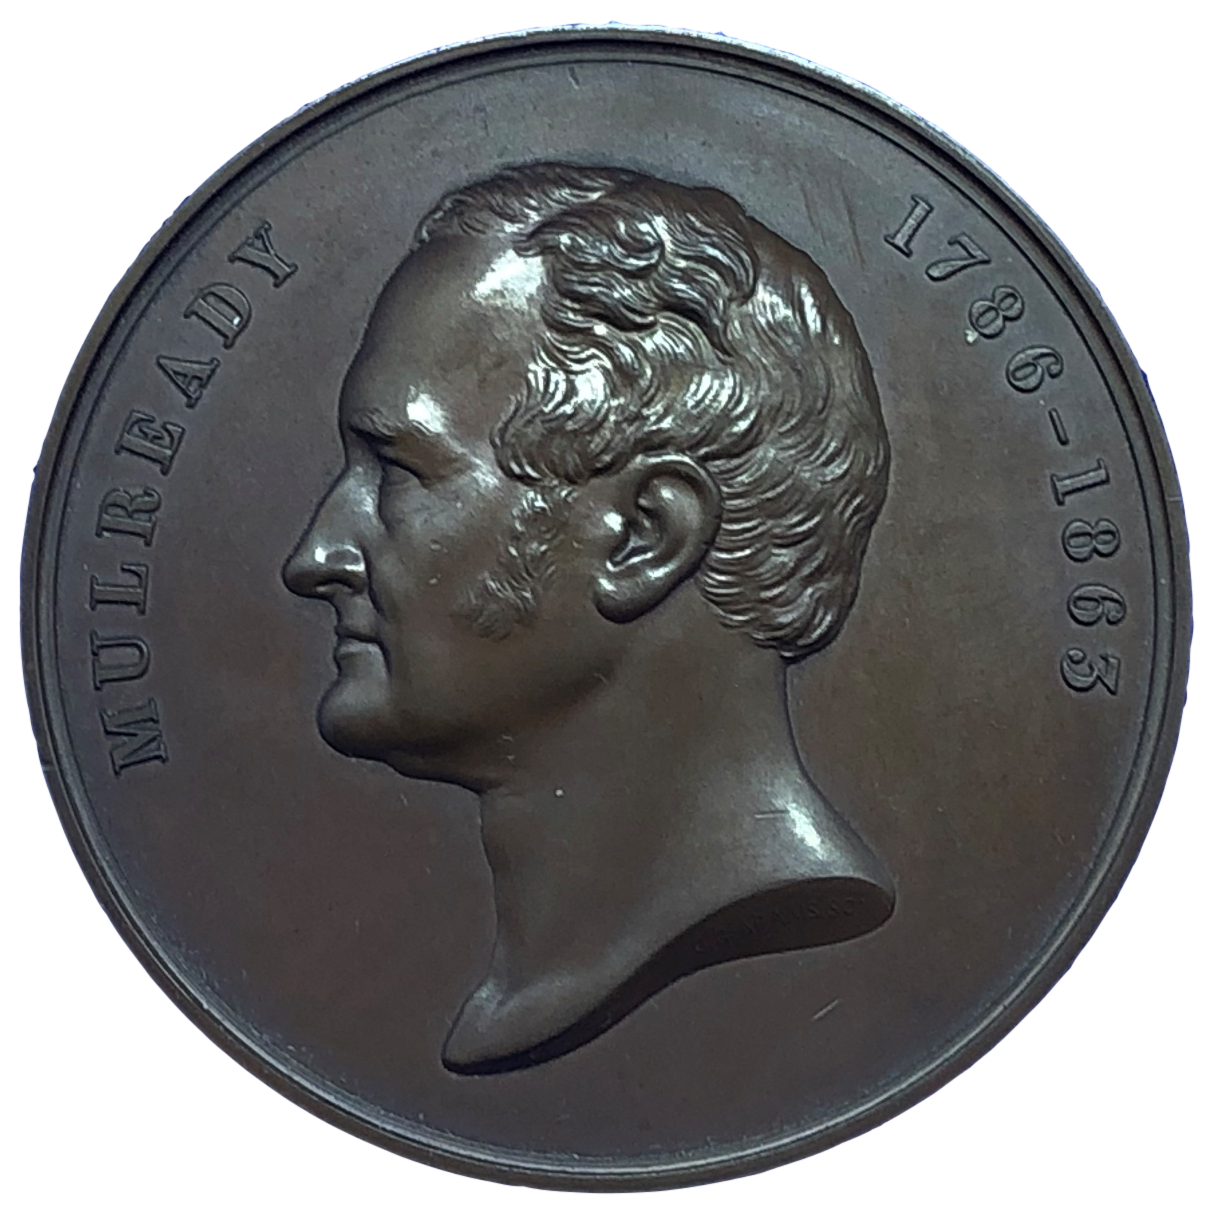 1877 William Mulready, Painter Historical Medallion by G G Adams Obverse